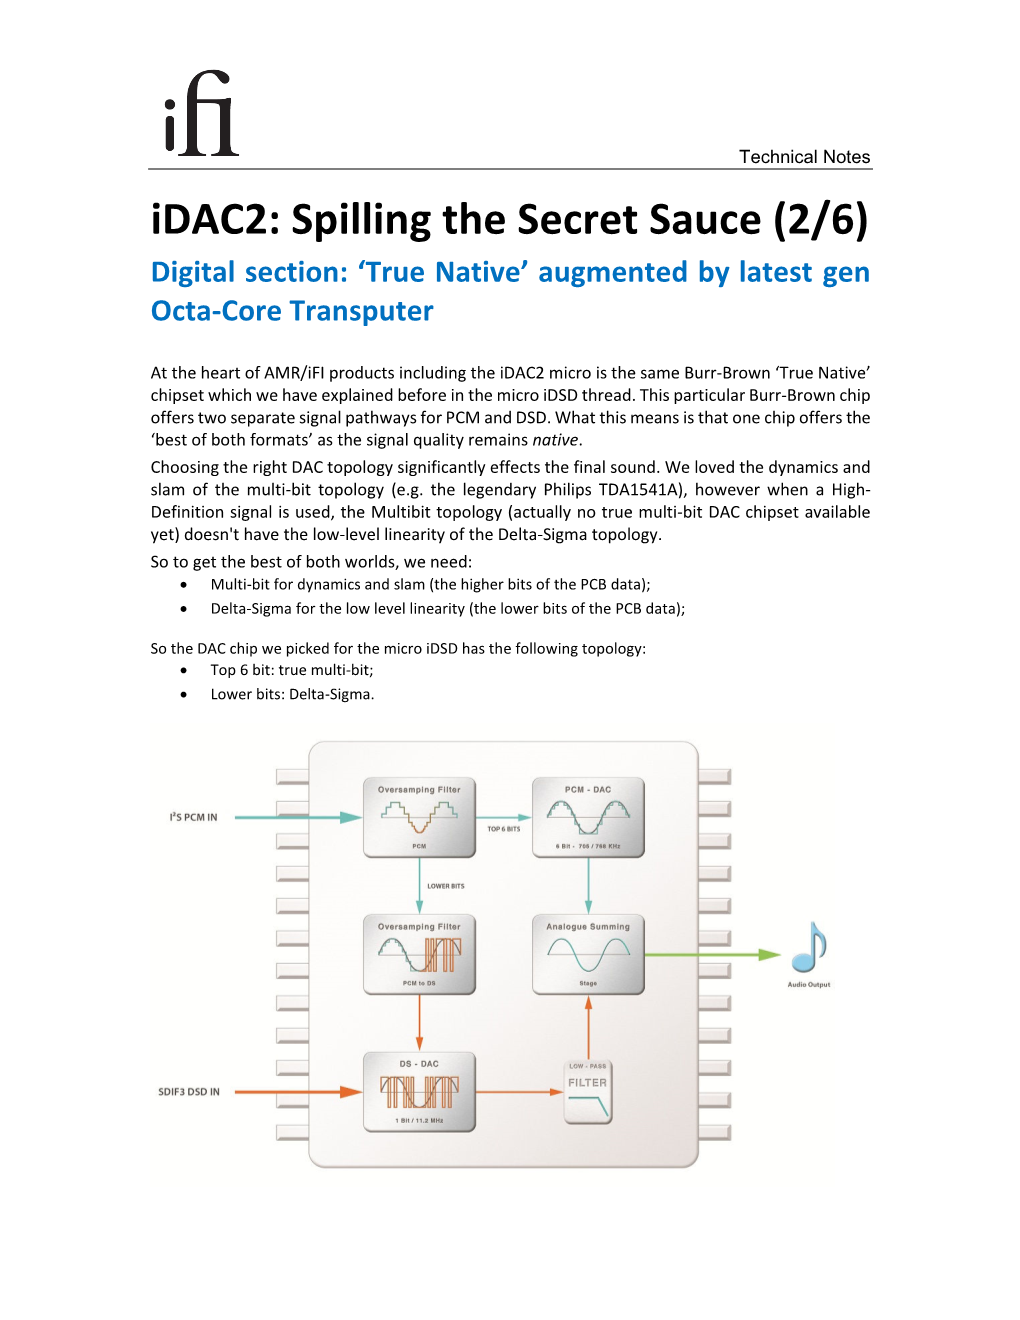 Idac2: Spilling the Secret Sauce (2/6) Digital Section: ‘True Native’ Augmented by Latest Gen Octa-Core Transputer